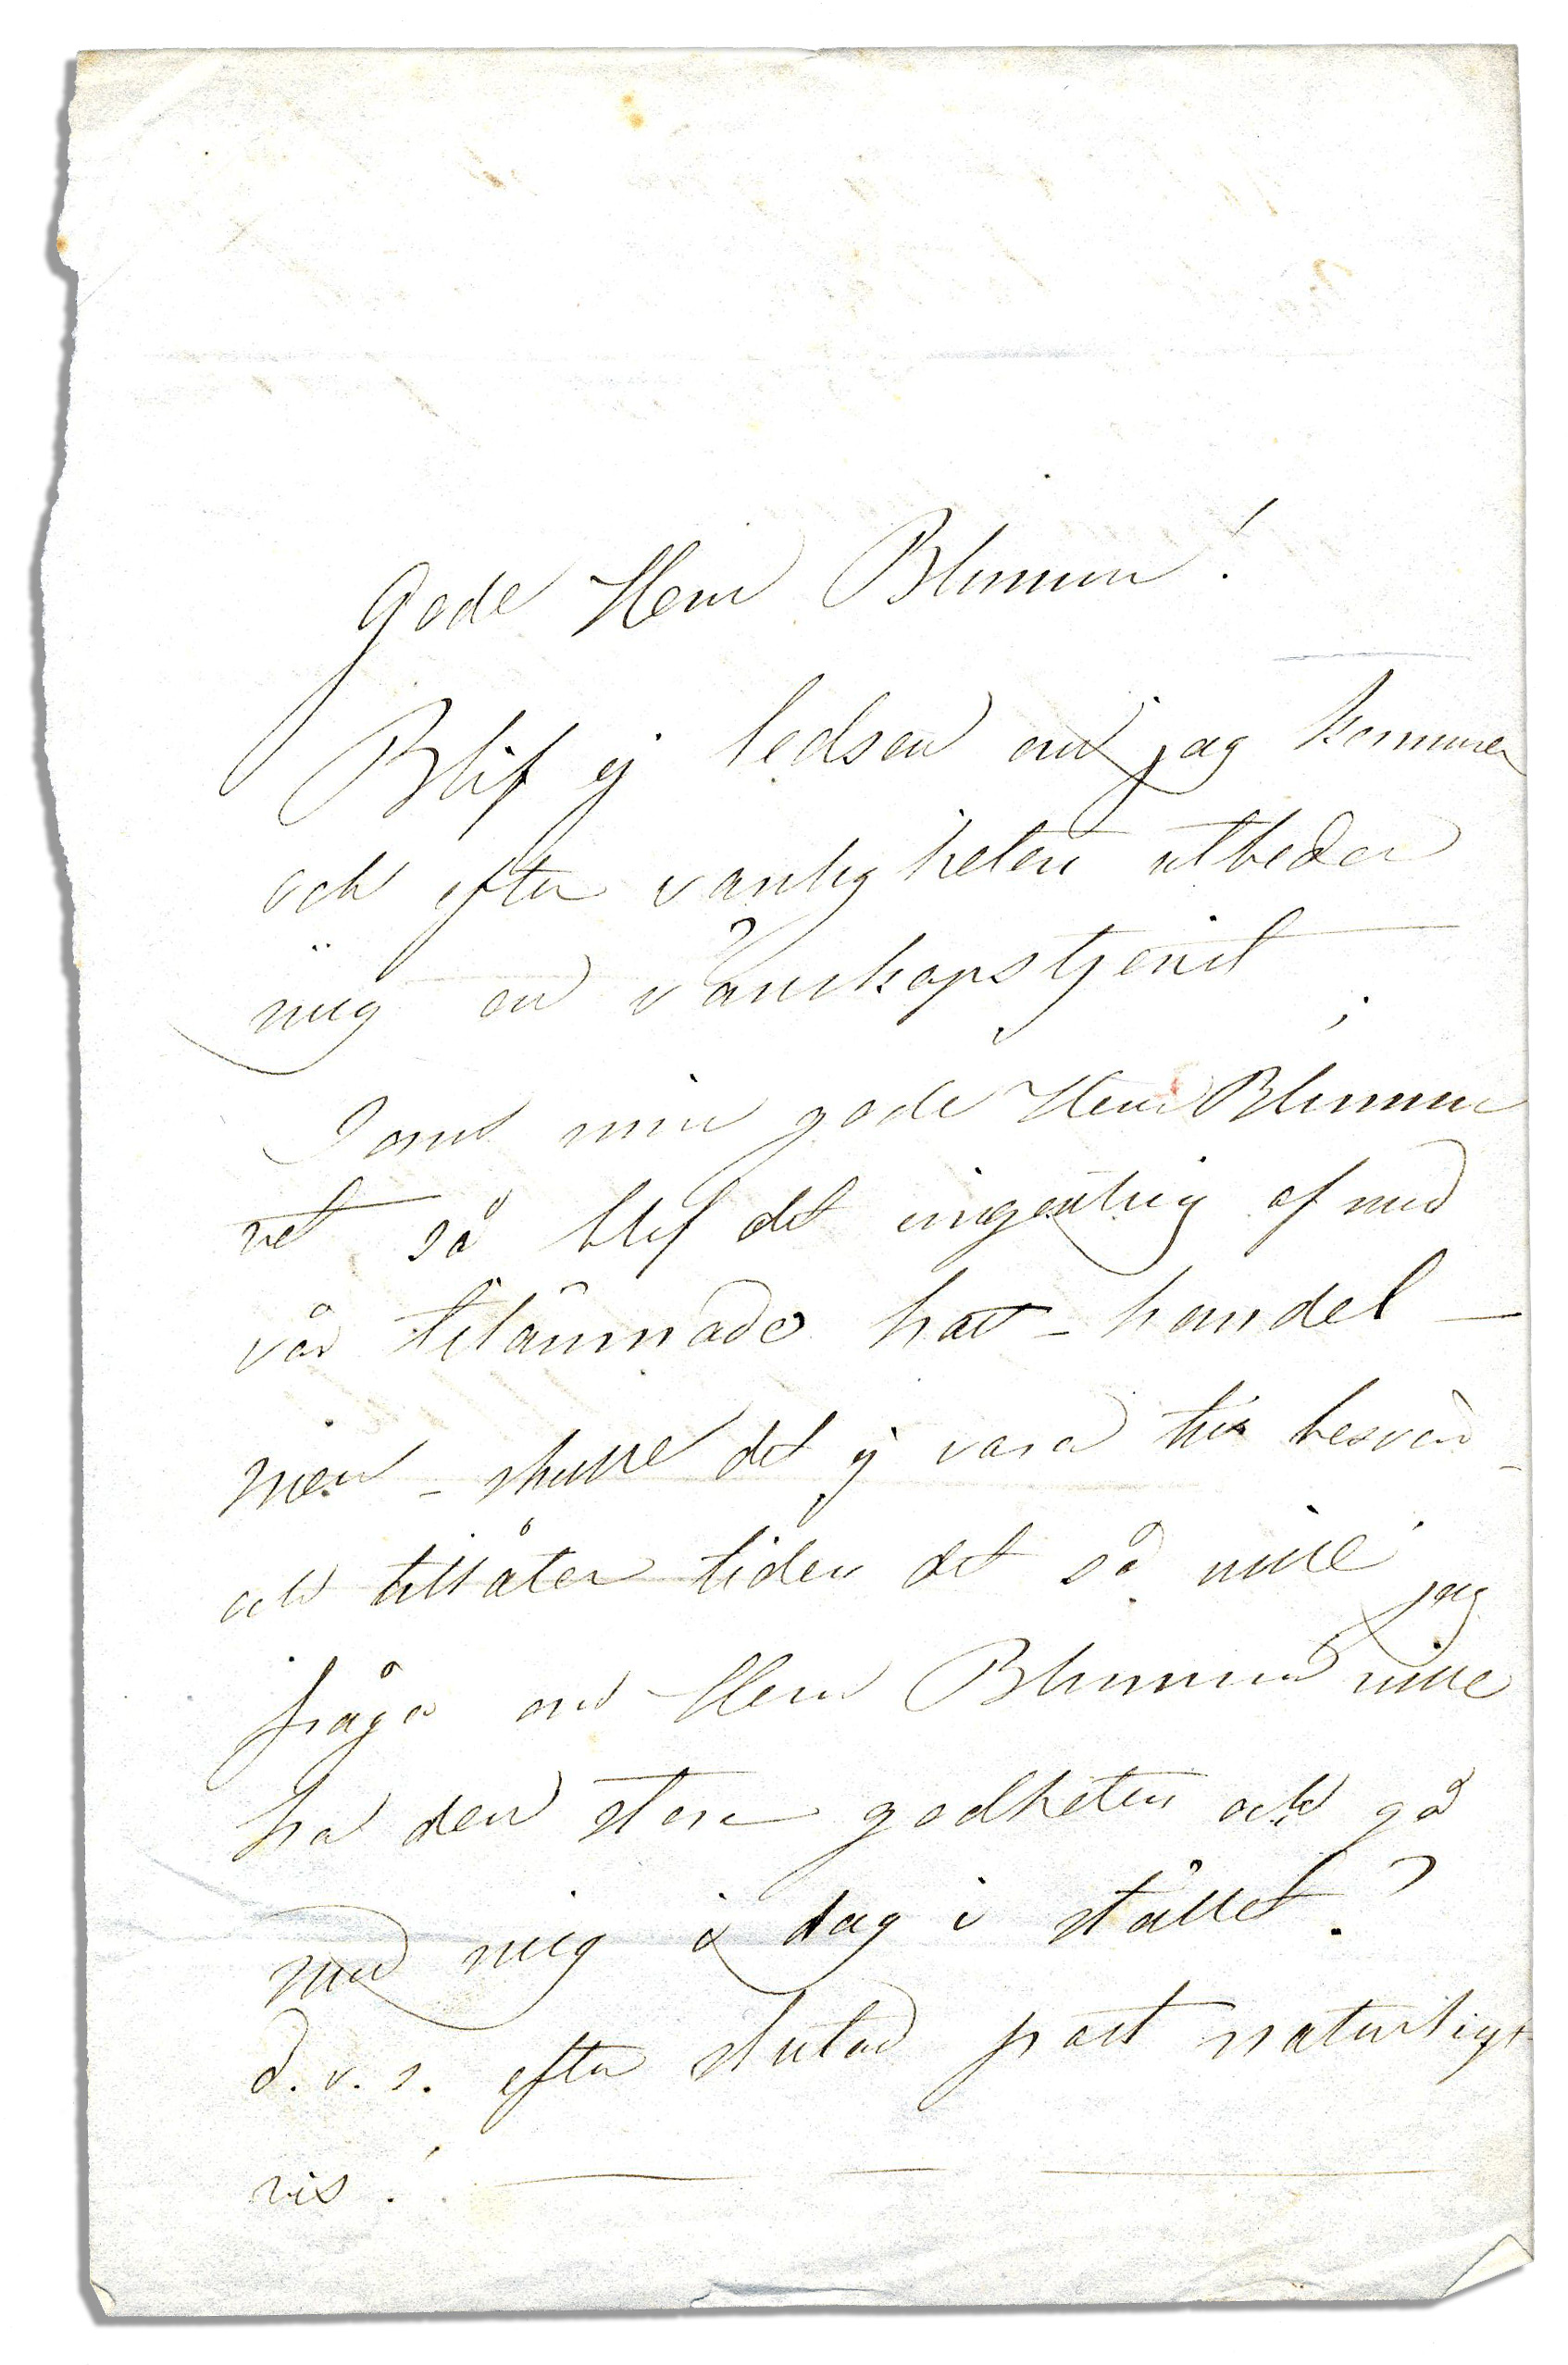 Jenny Lind ''Swedish Nightingale'' Autograph Letter Signed Autograph letter signed by Jenny Lind, - Image 2 of 3